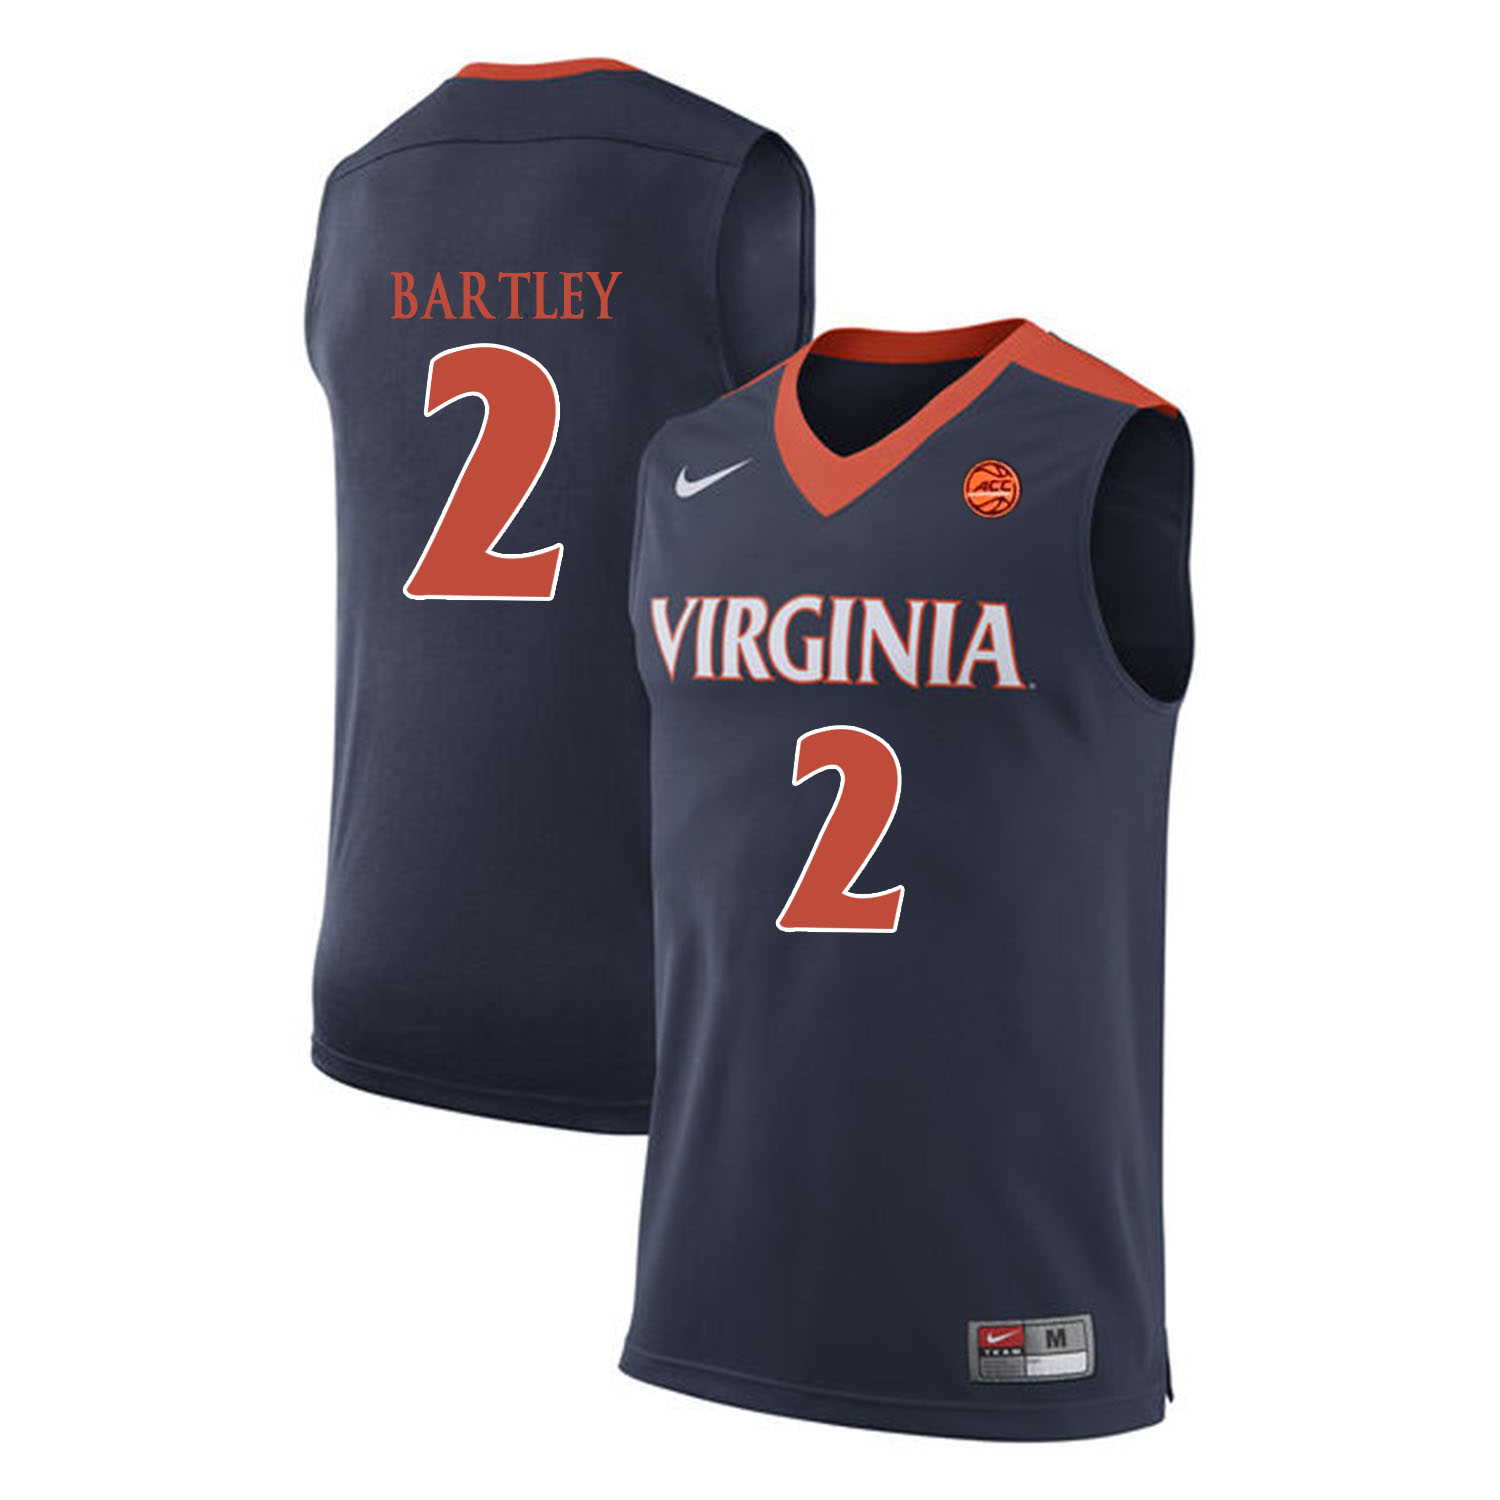 Virginia Cavaliers 2 Justice Bartley Navy College Basketball Jersey